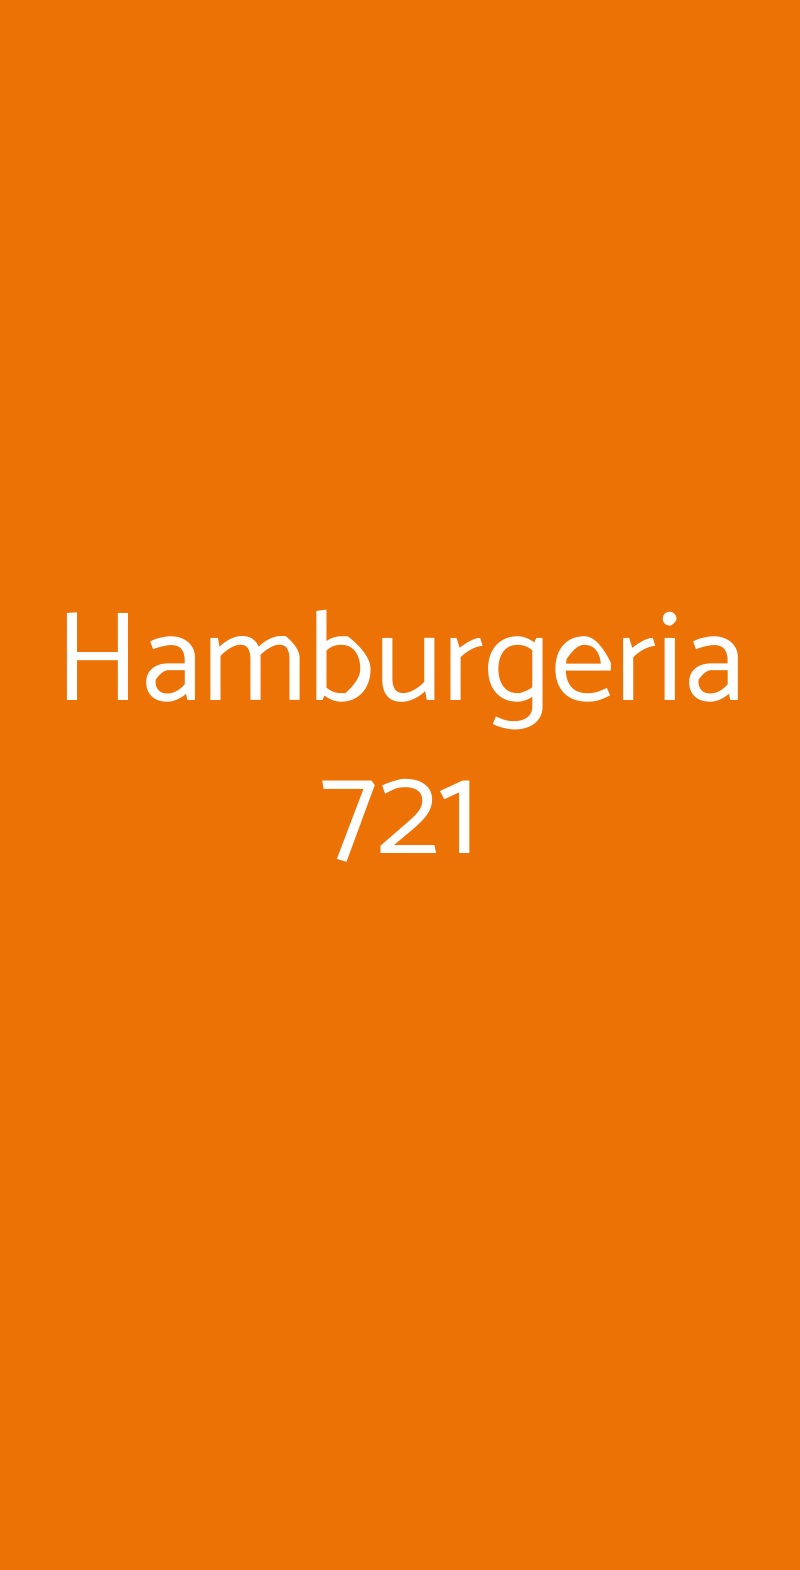 Hamburgeria 721 Vigevano menù 1 pagina